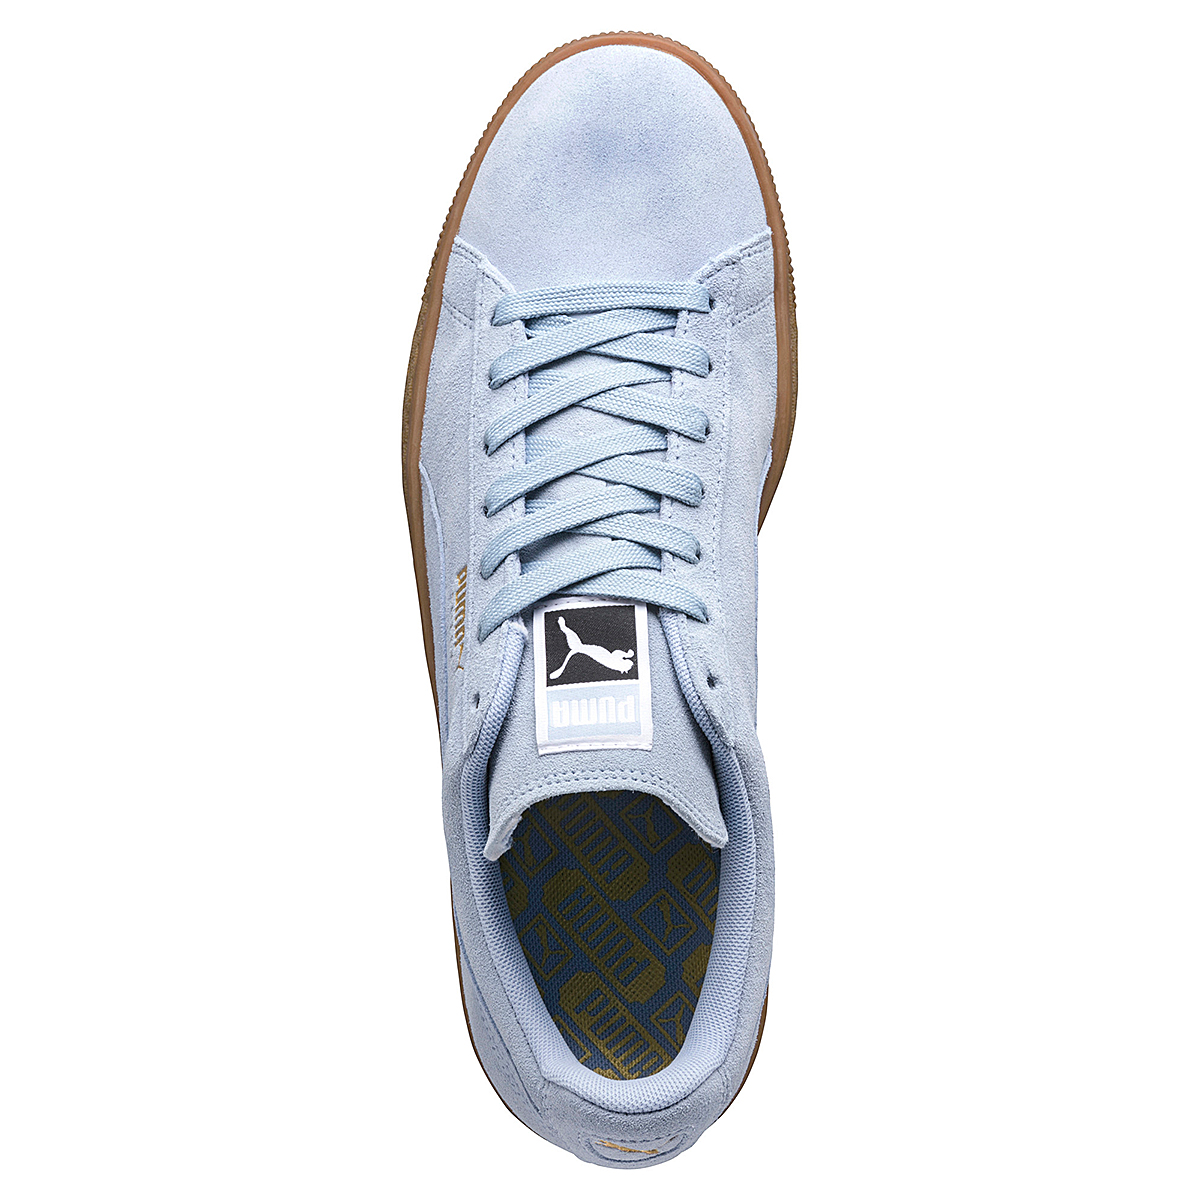 Puma Suede Classic Gum Unisex Sneaker Schuhe Leder blau 366489 01